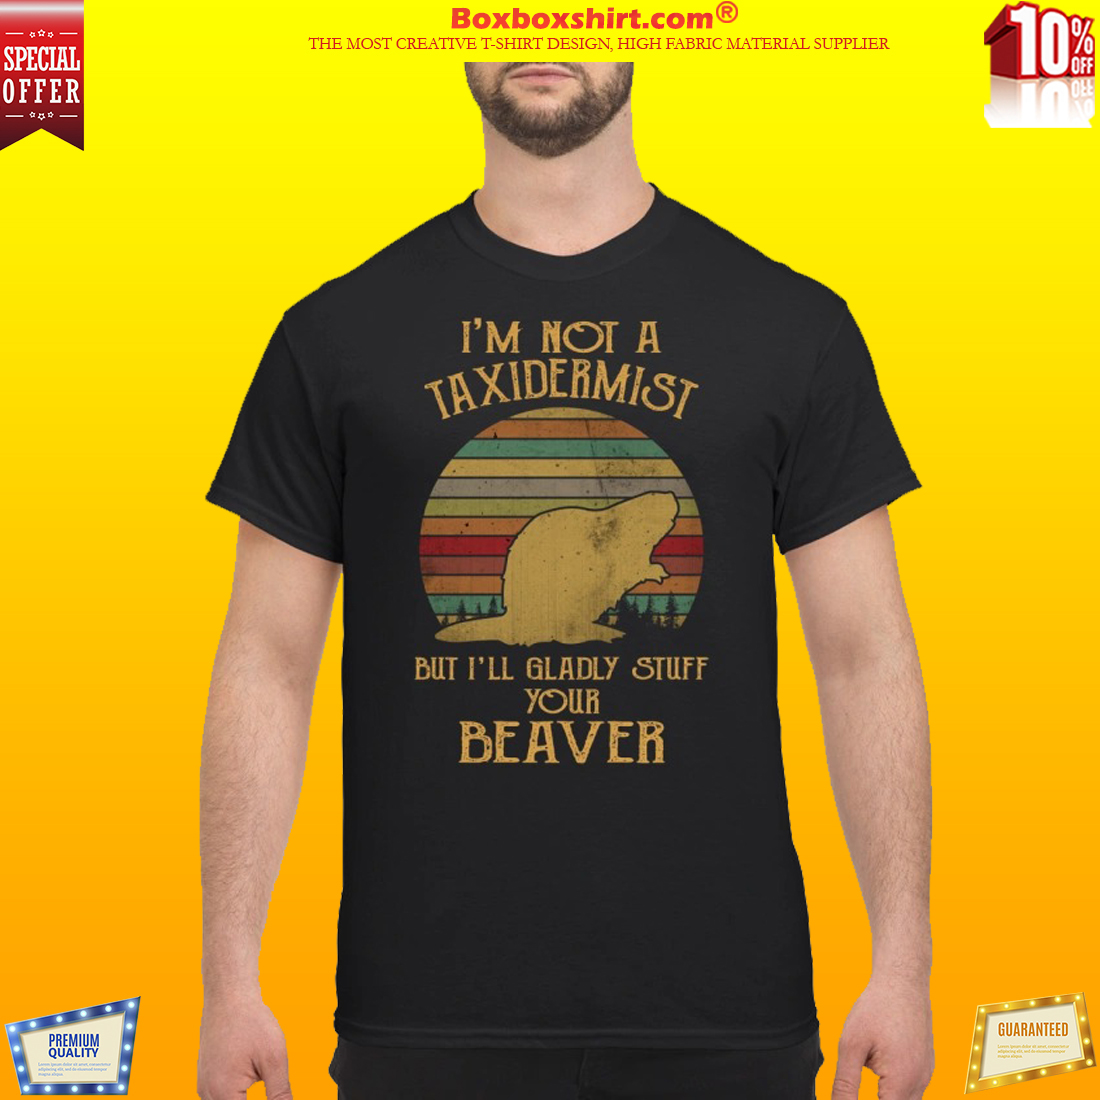 I'm not a taxidermist but I'll gladly stuff your beaver classic shirt